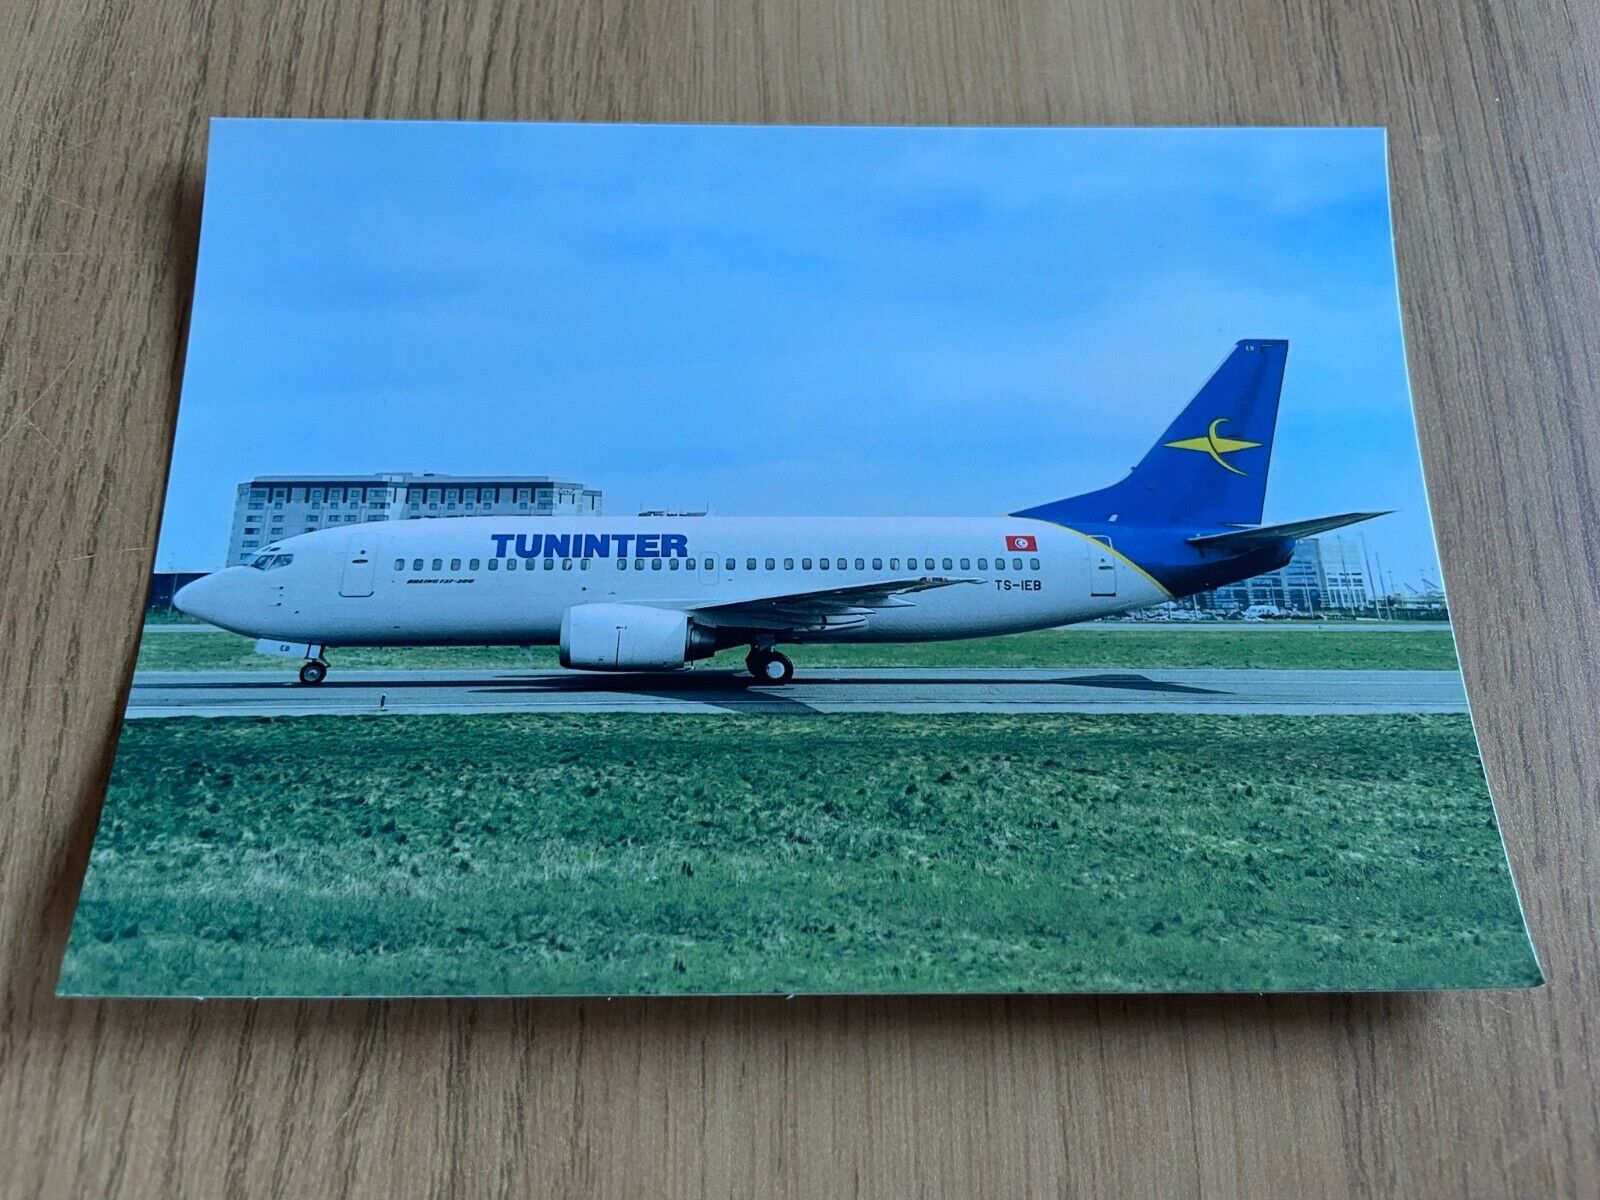 Tuninter Boeing 737-300 aircraft postcard